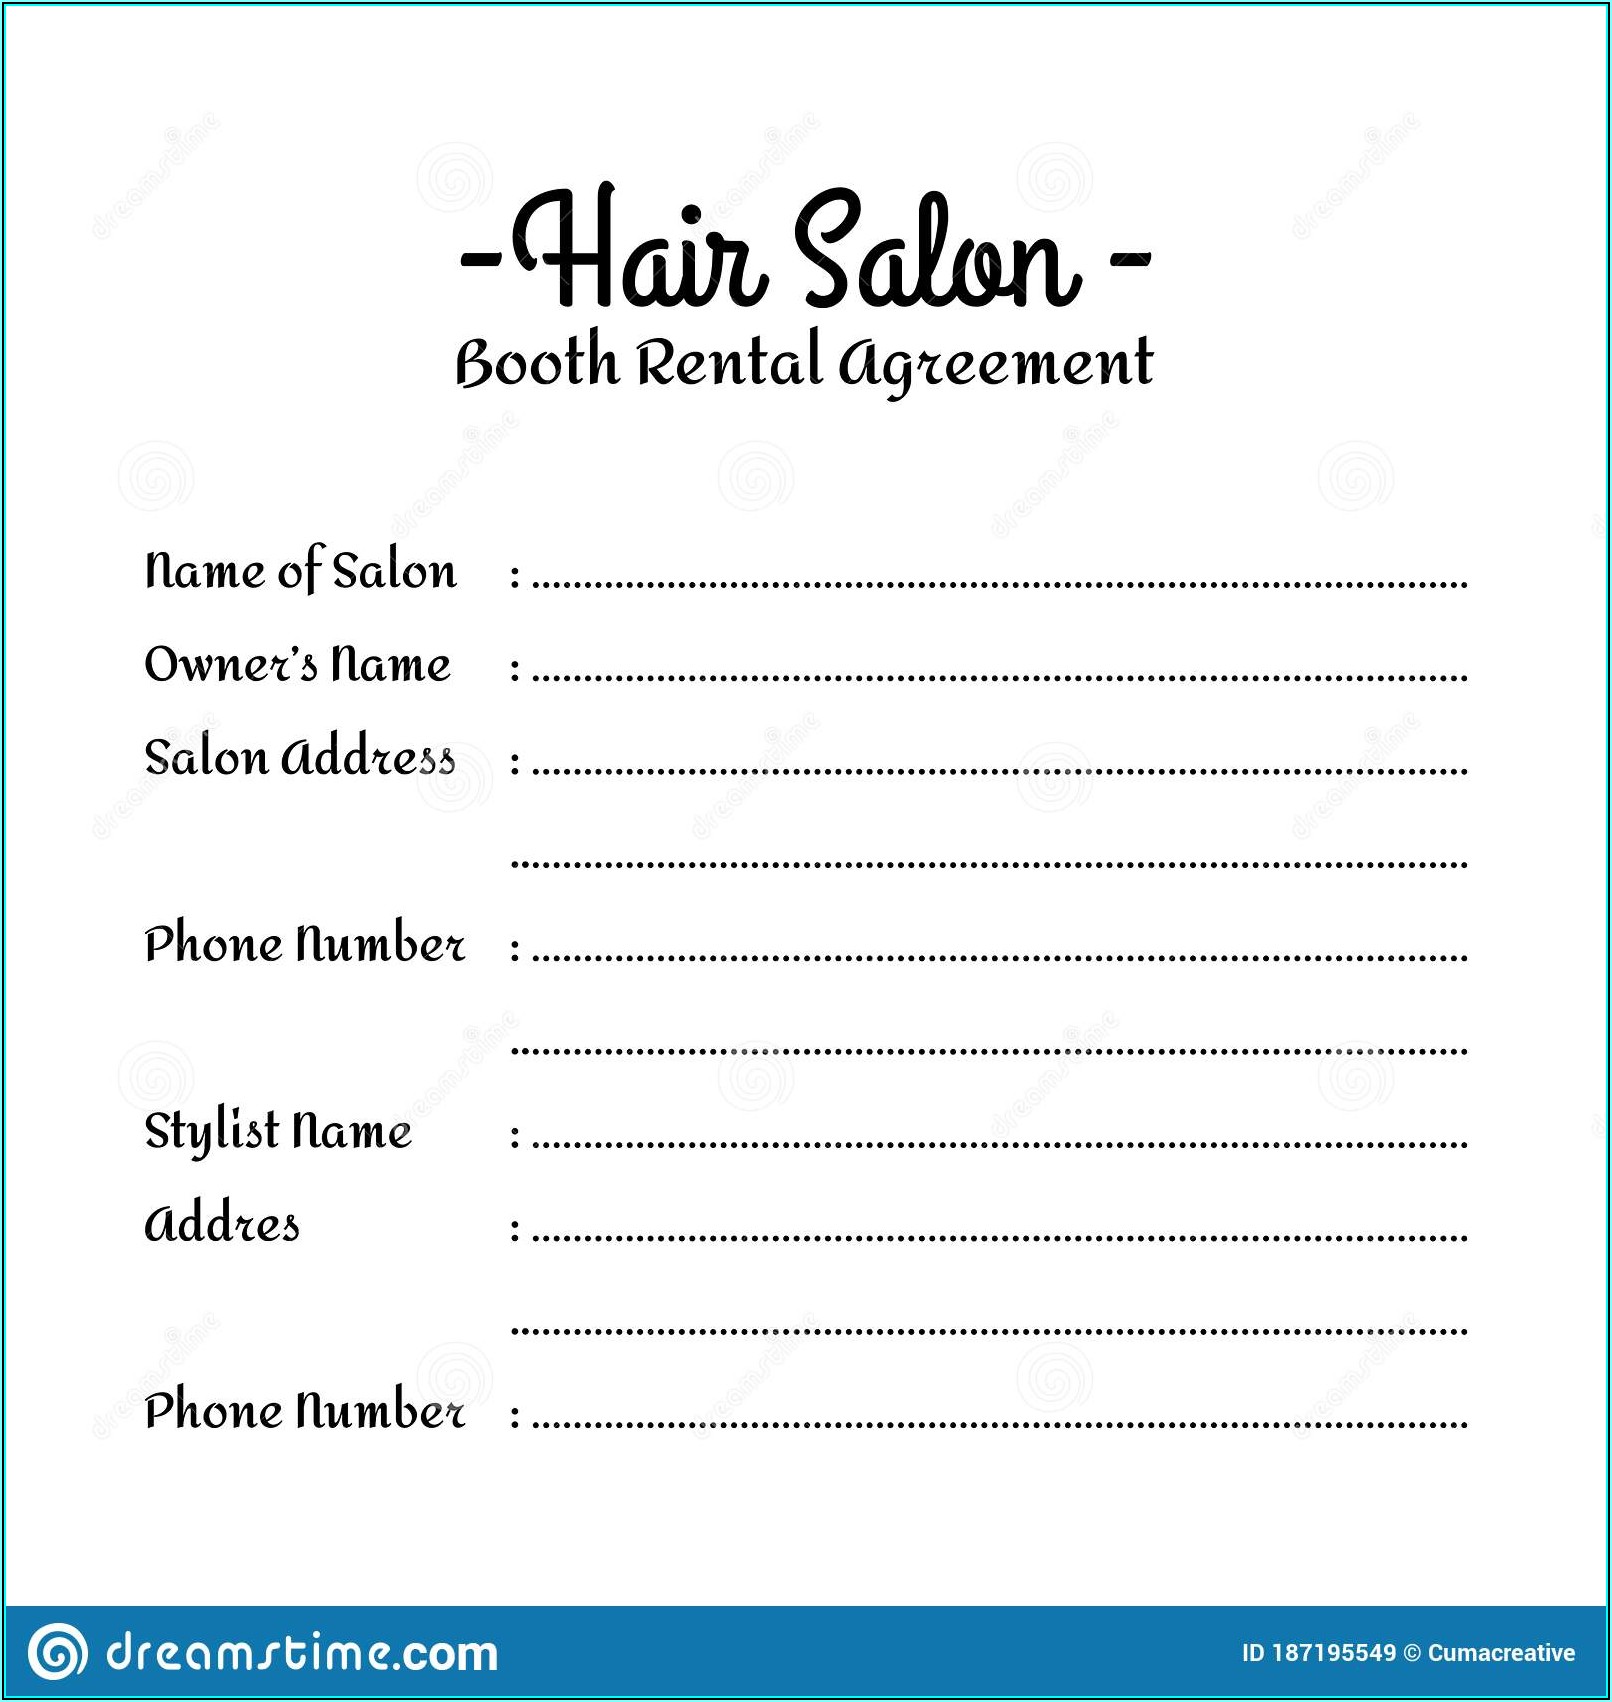 Salon Booth Rental Agreement Form